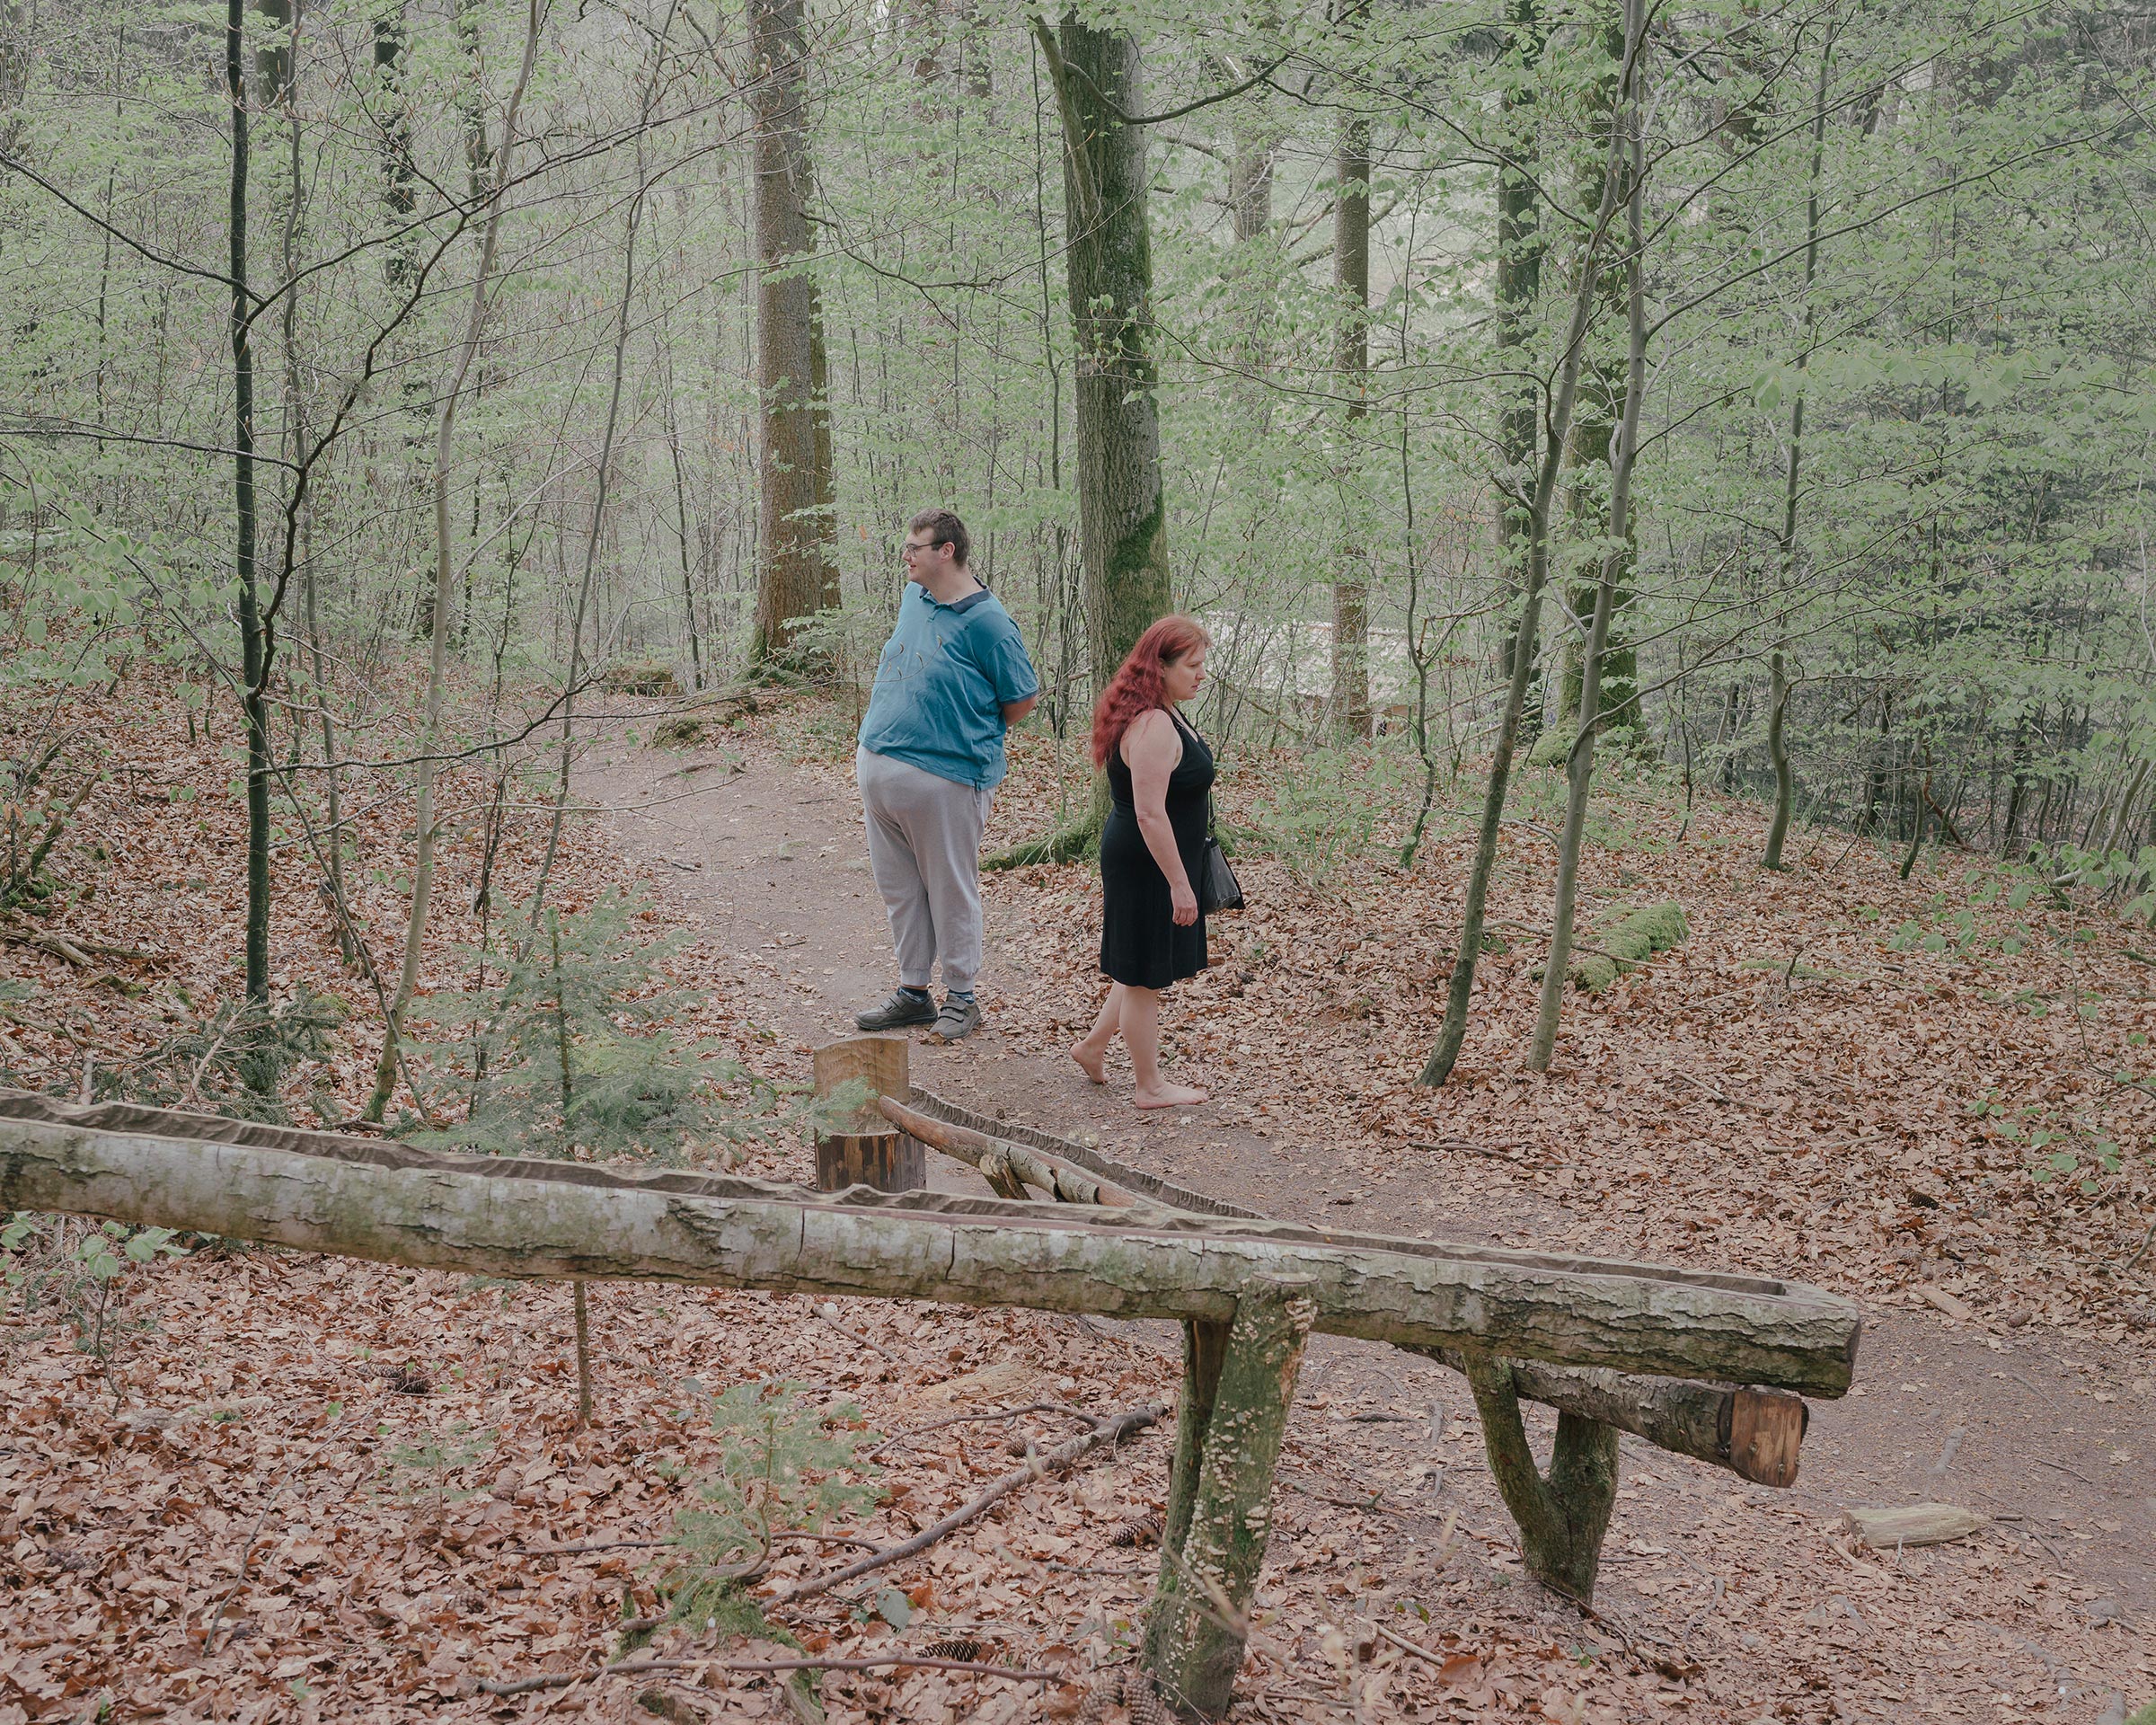 Michaela Schenker and her son Lukas take a walk through a forest near the village Ellenberg on April 19.